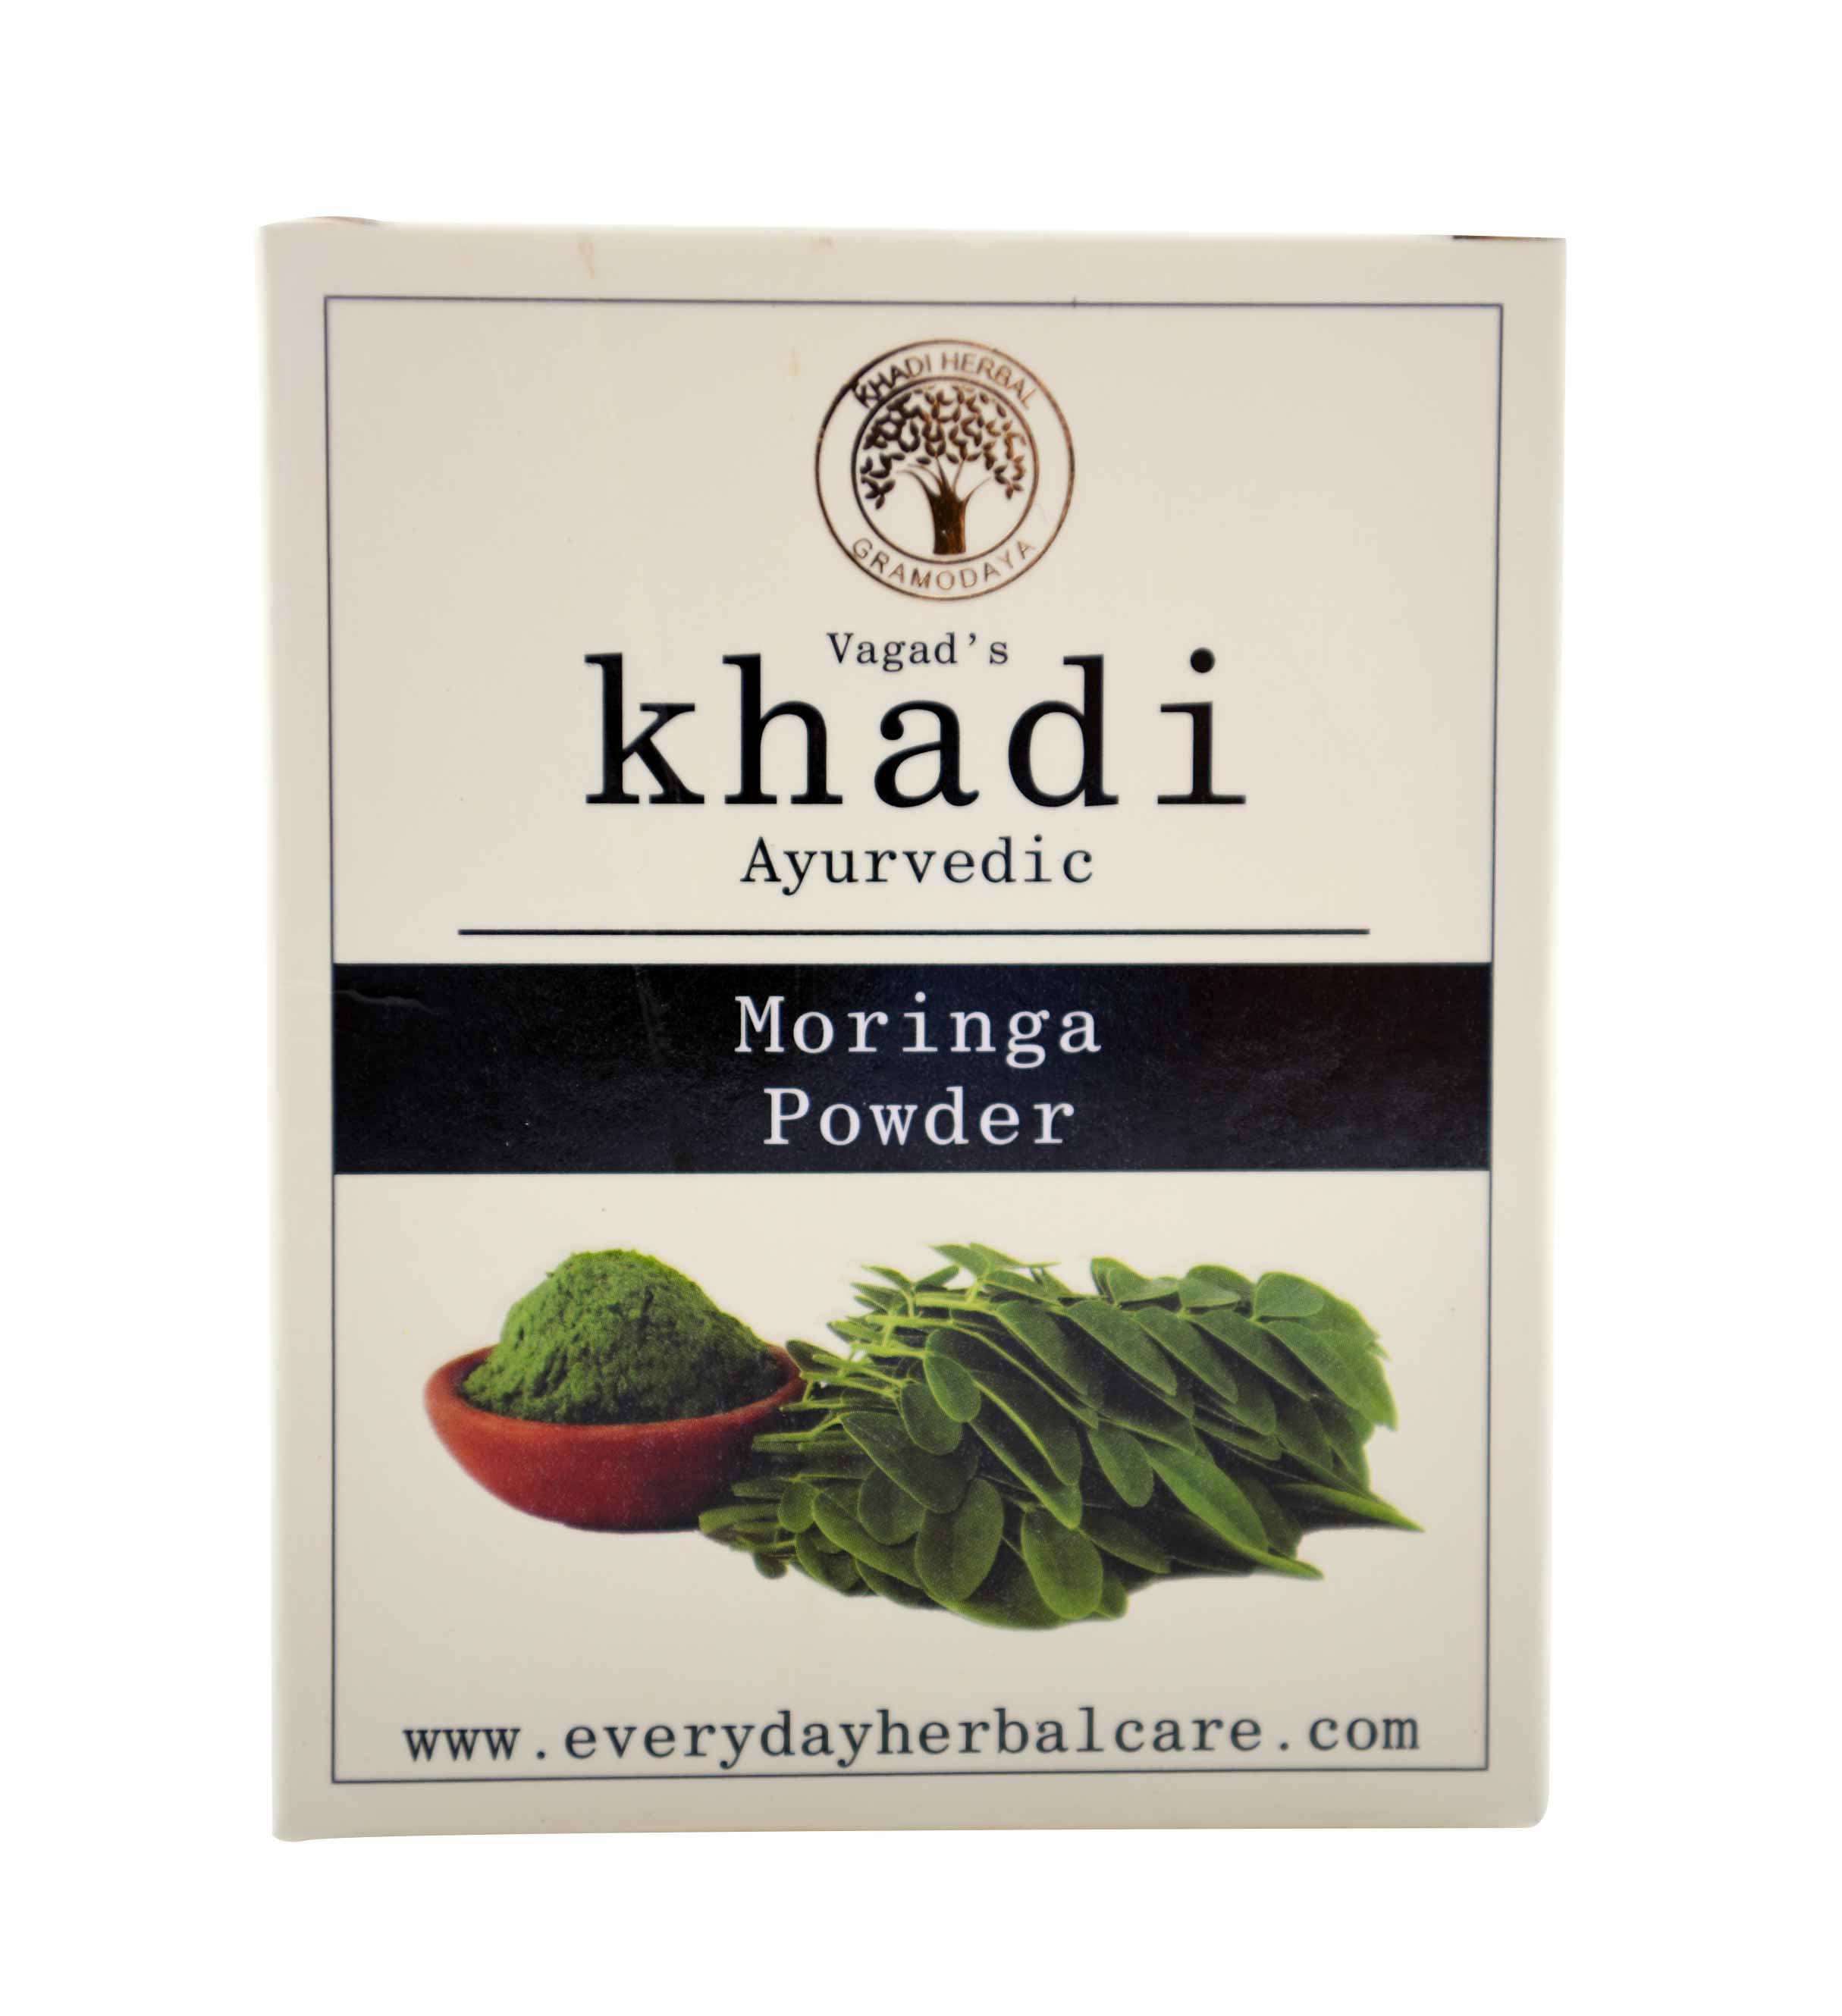 Buy Vagad's Khadi Moringa Powder at Best Price Online